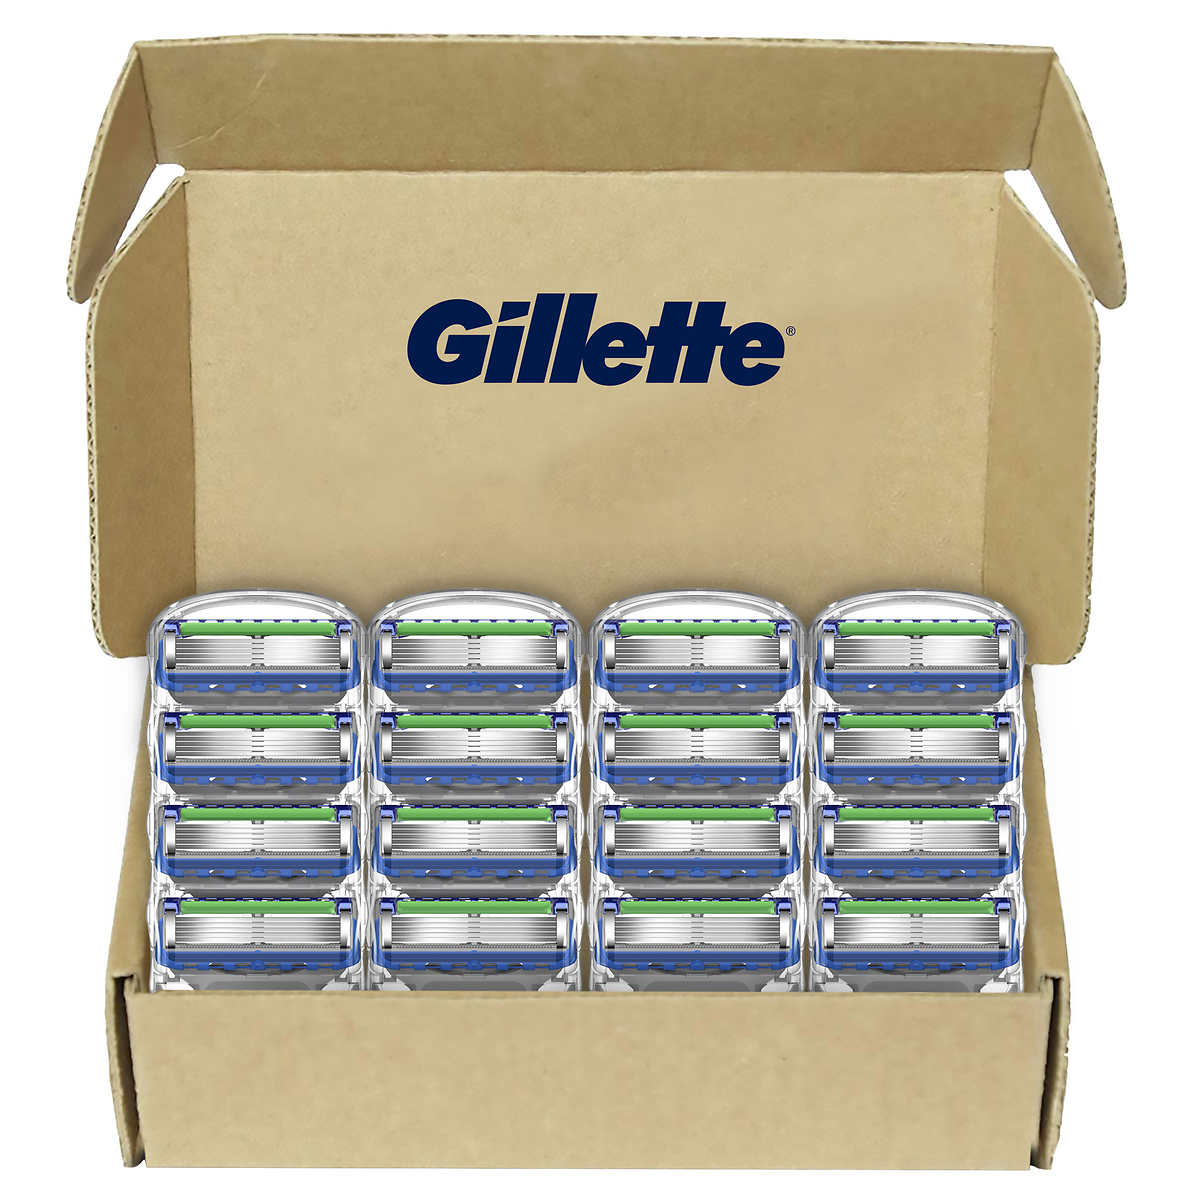 Gillette Proglide Cartridge Refills 16 Count